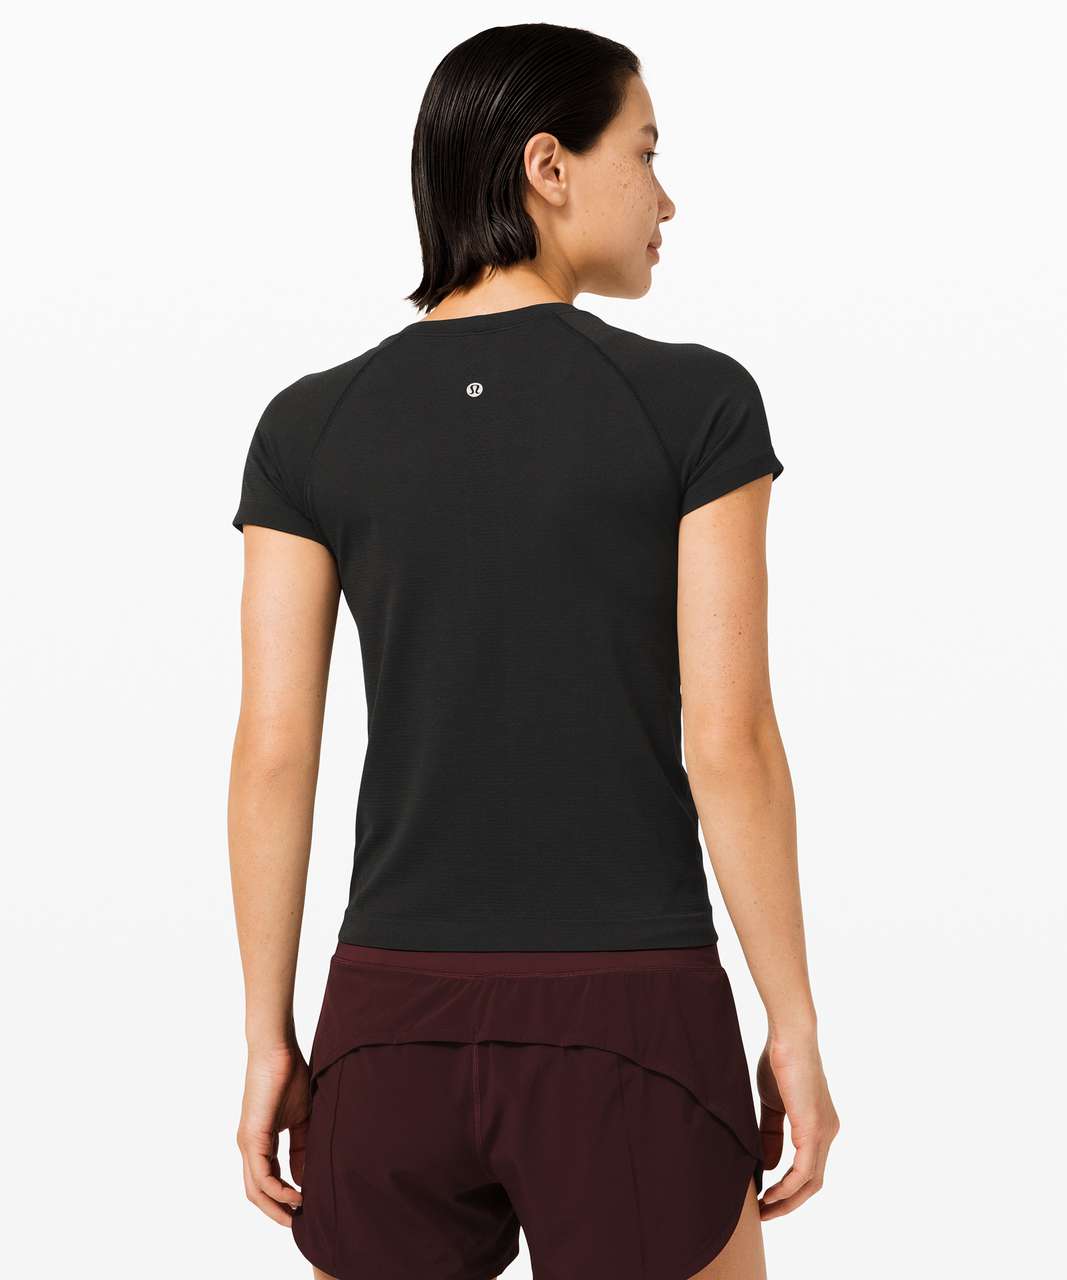 Swiftly Tech Short-Sleeve Shirt 2.0 Race Length *Plant-Based Nylon